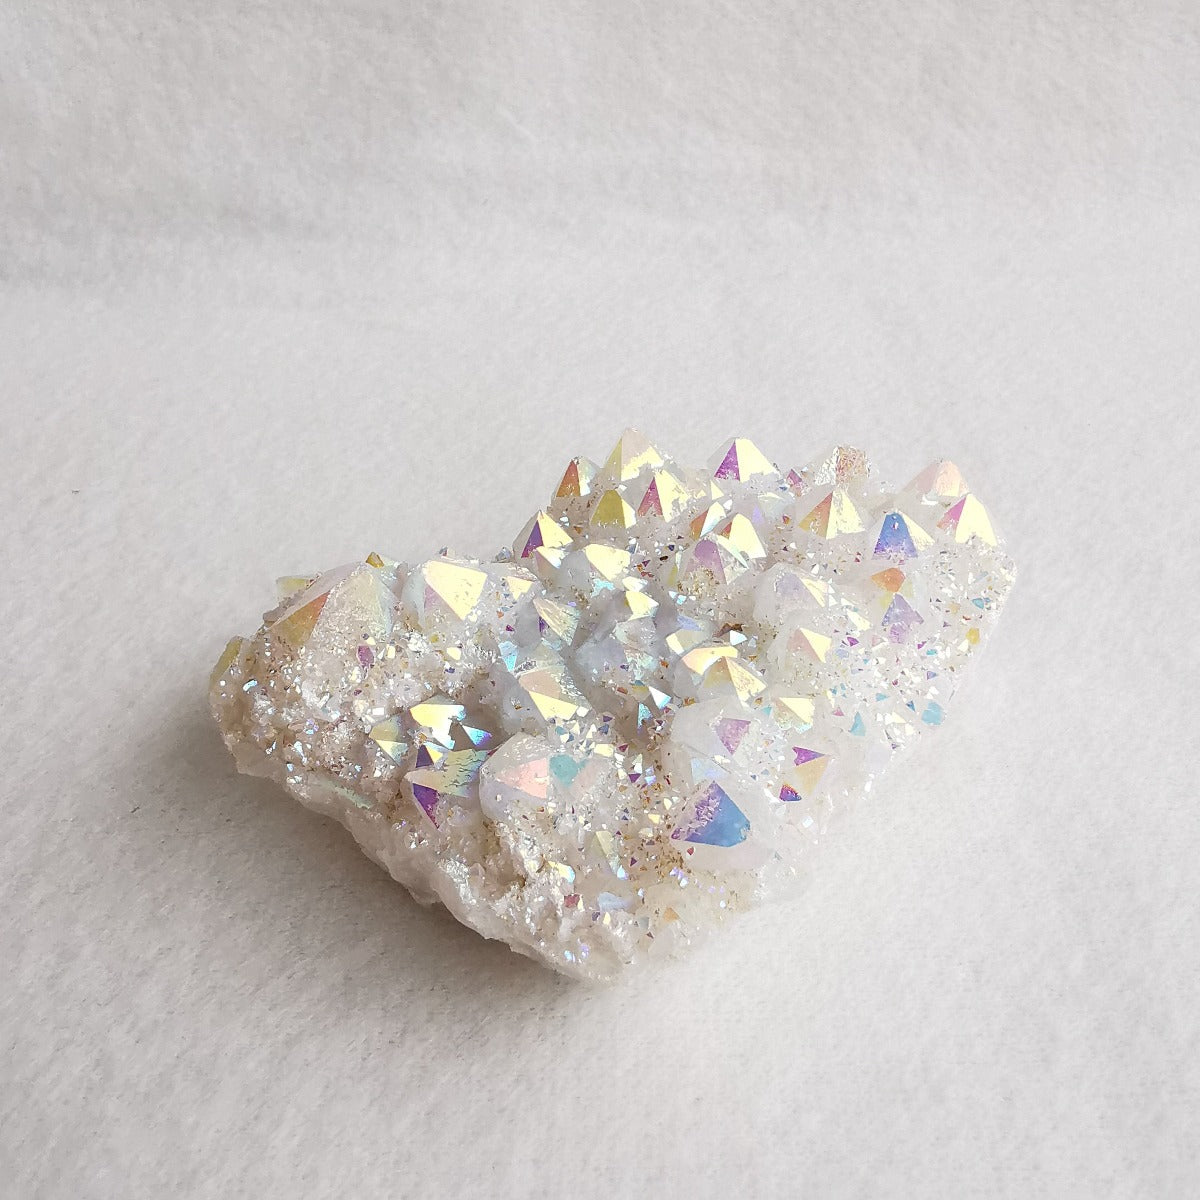 Engel aura bergkrystall krystallgruppe 232 gram